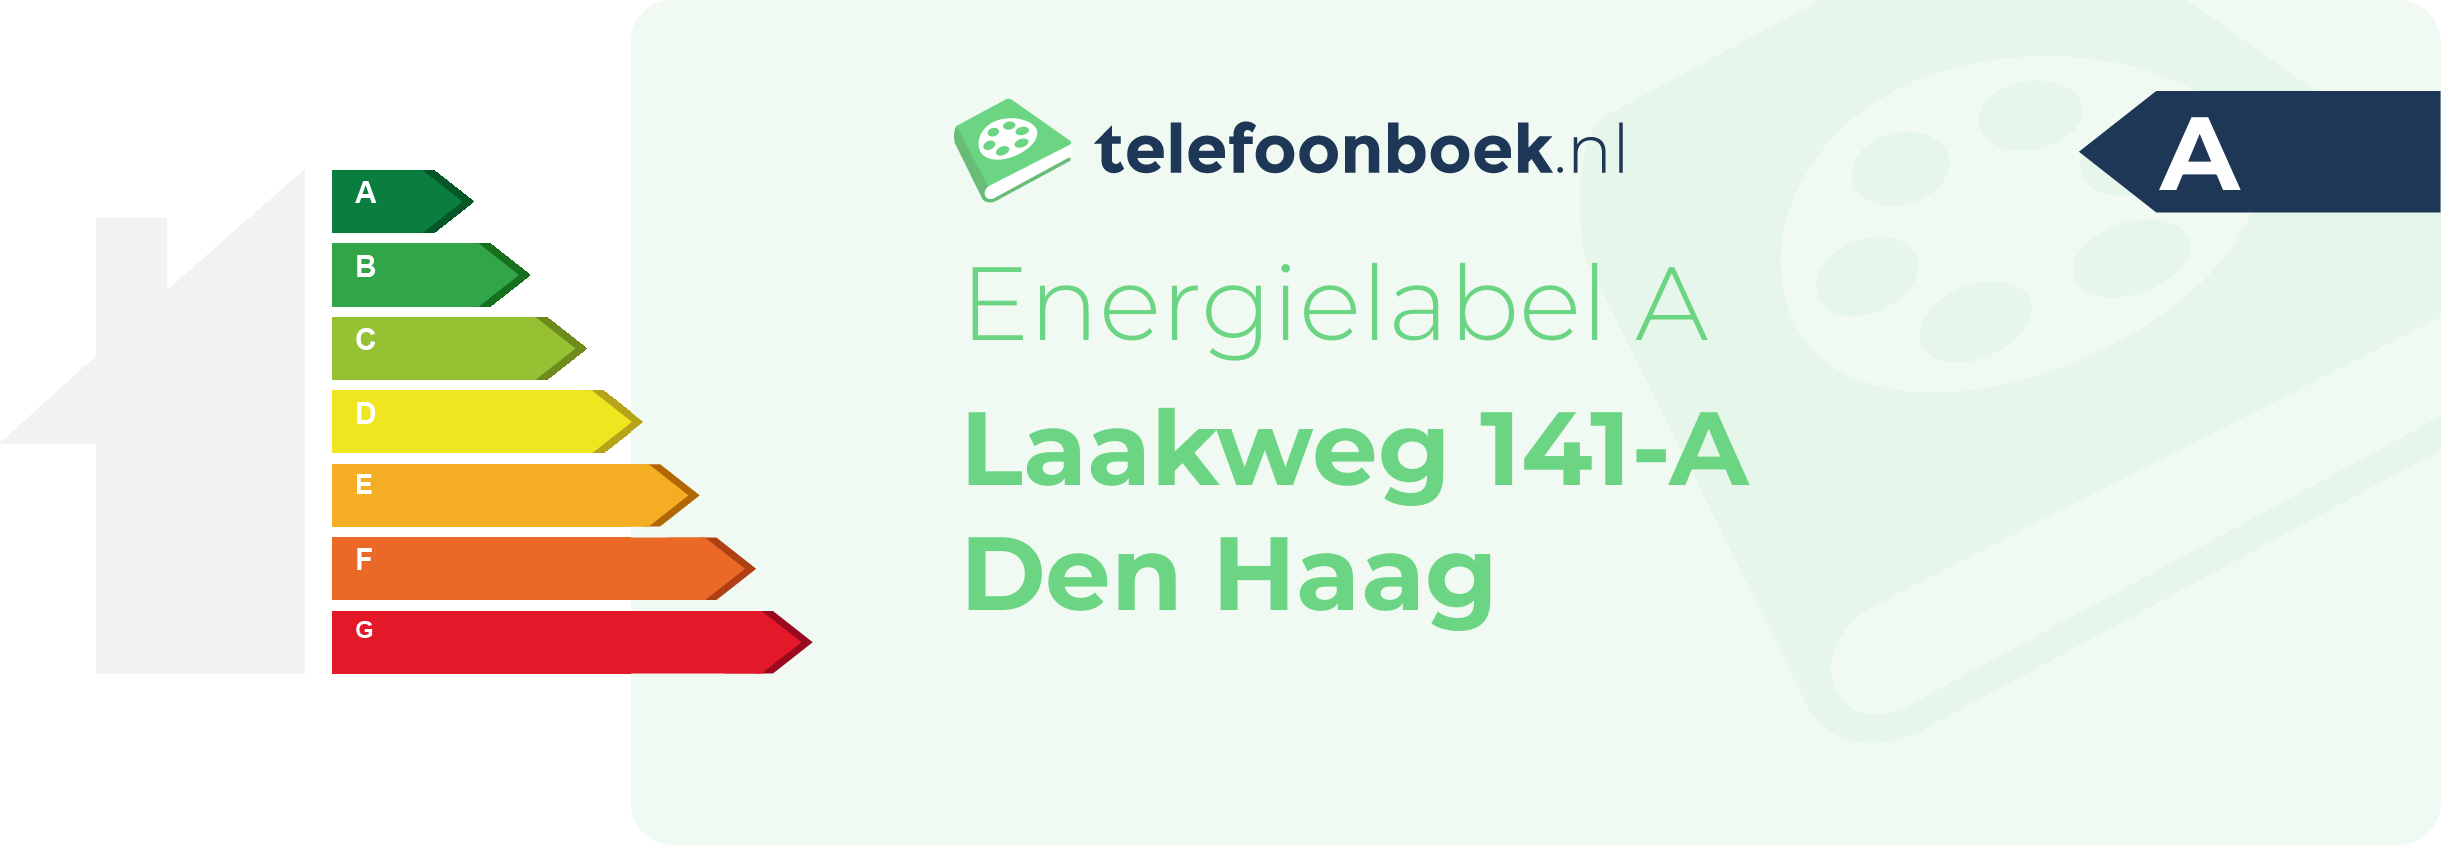 Energielabel Laakweg 141-A Den Haag